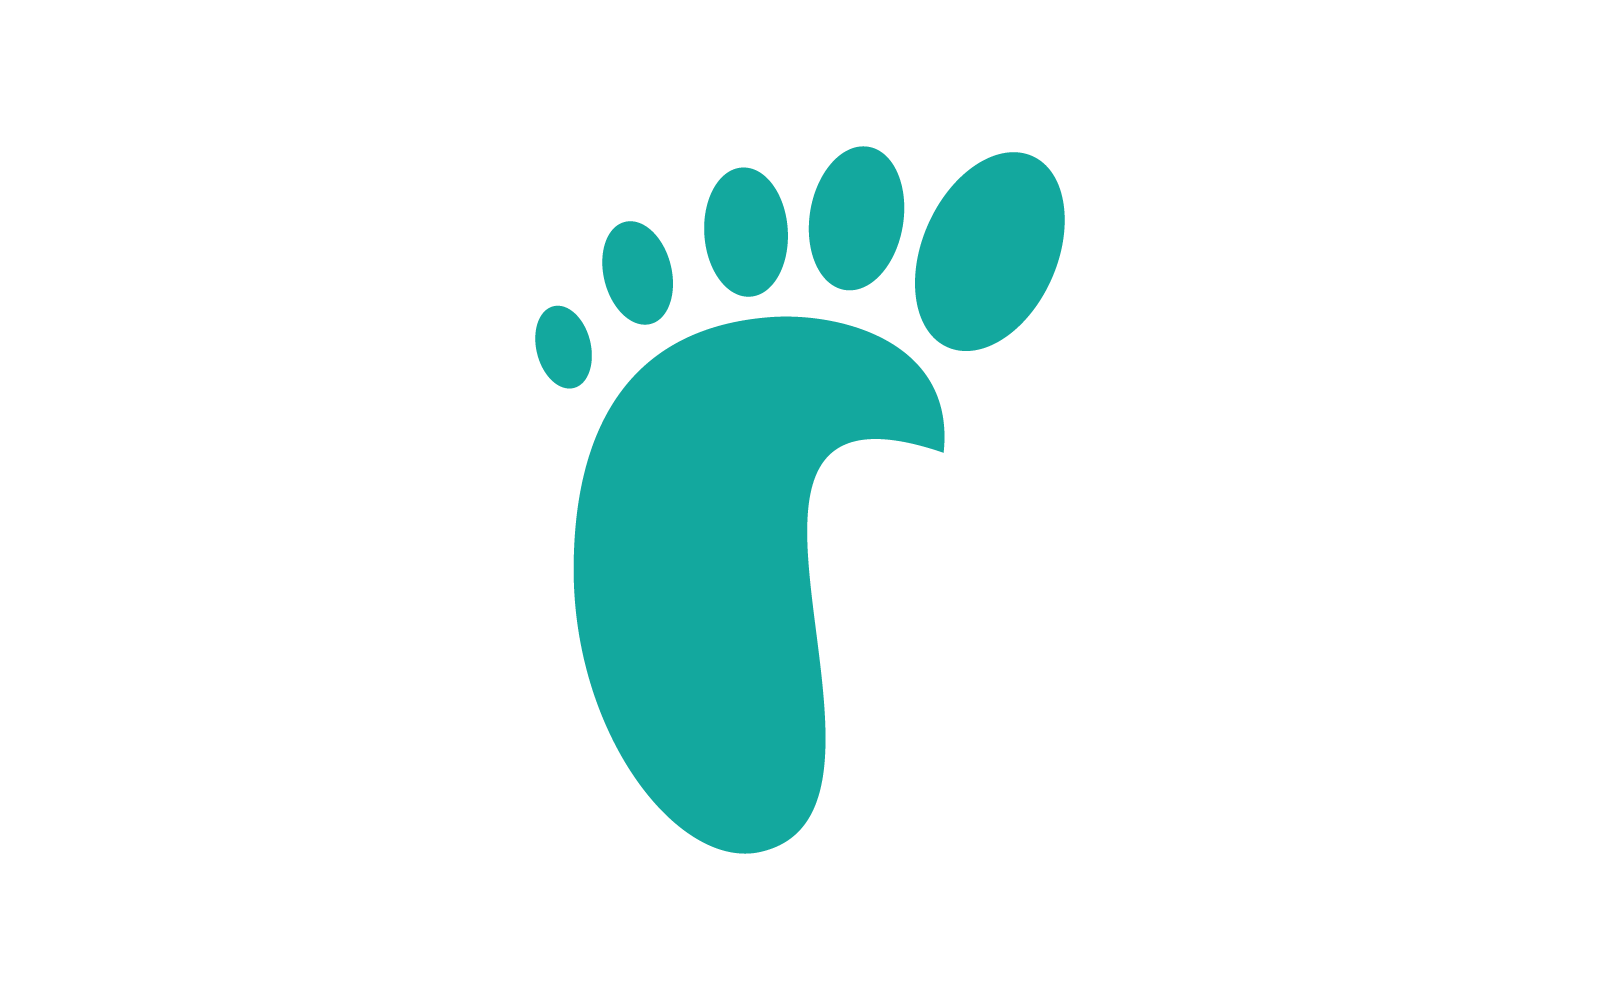 Foot care illustration logo icon vector design